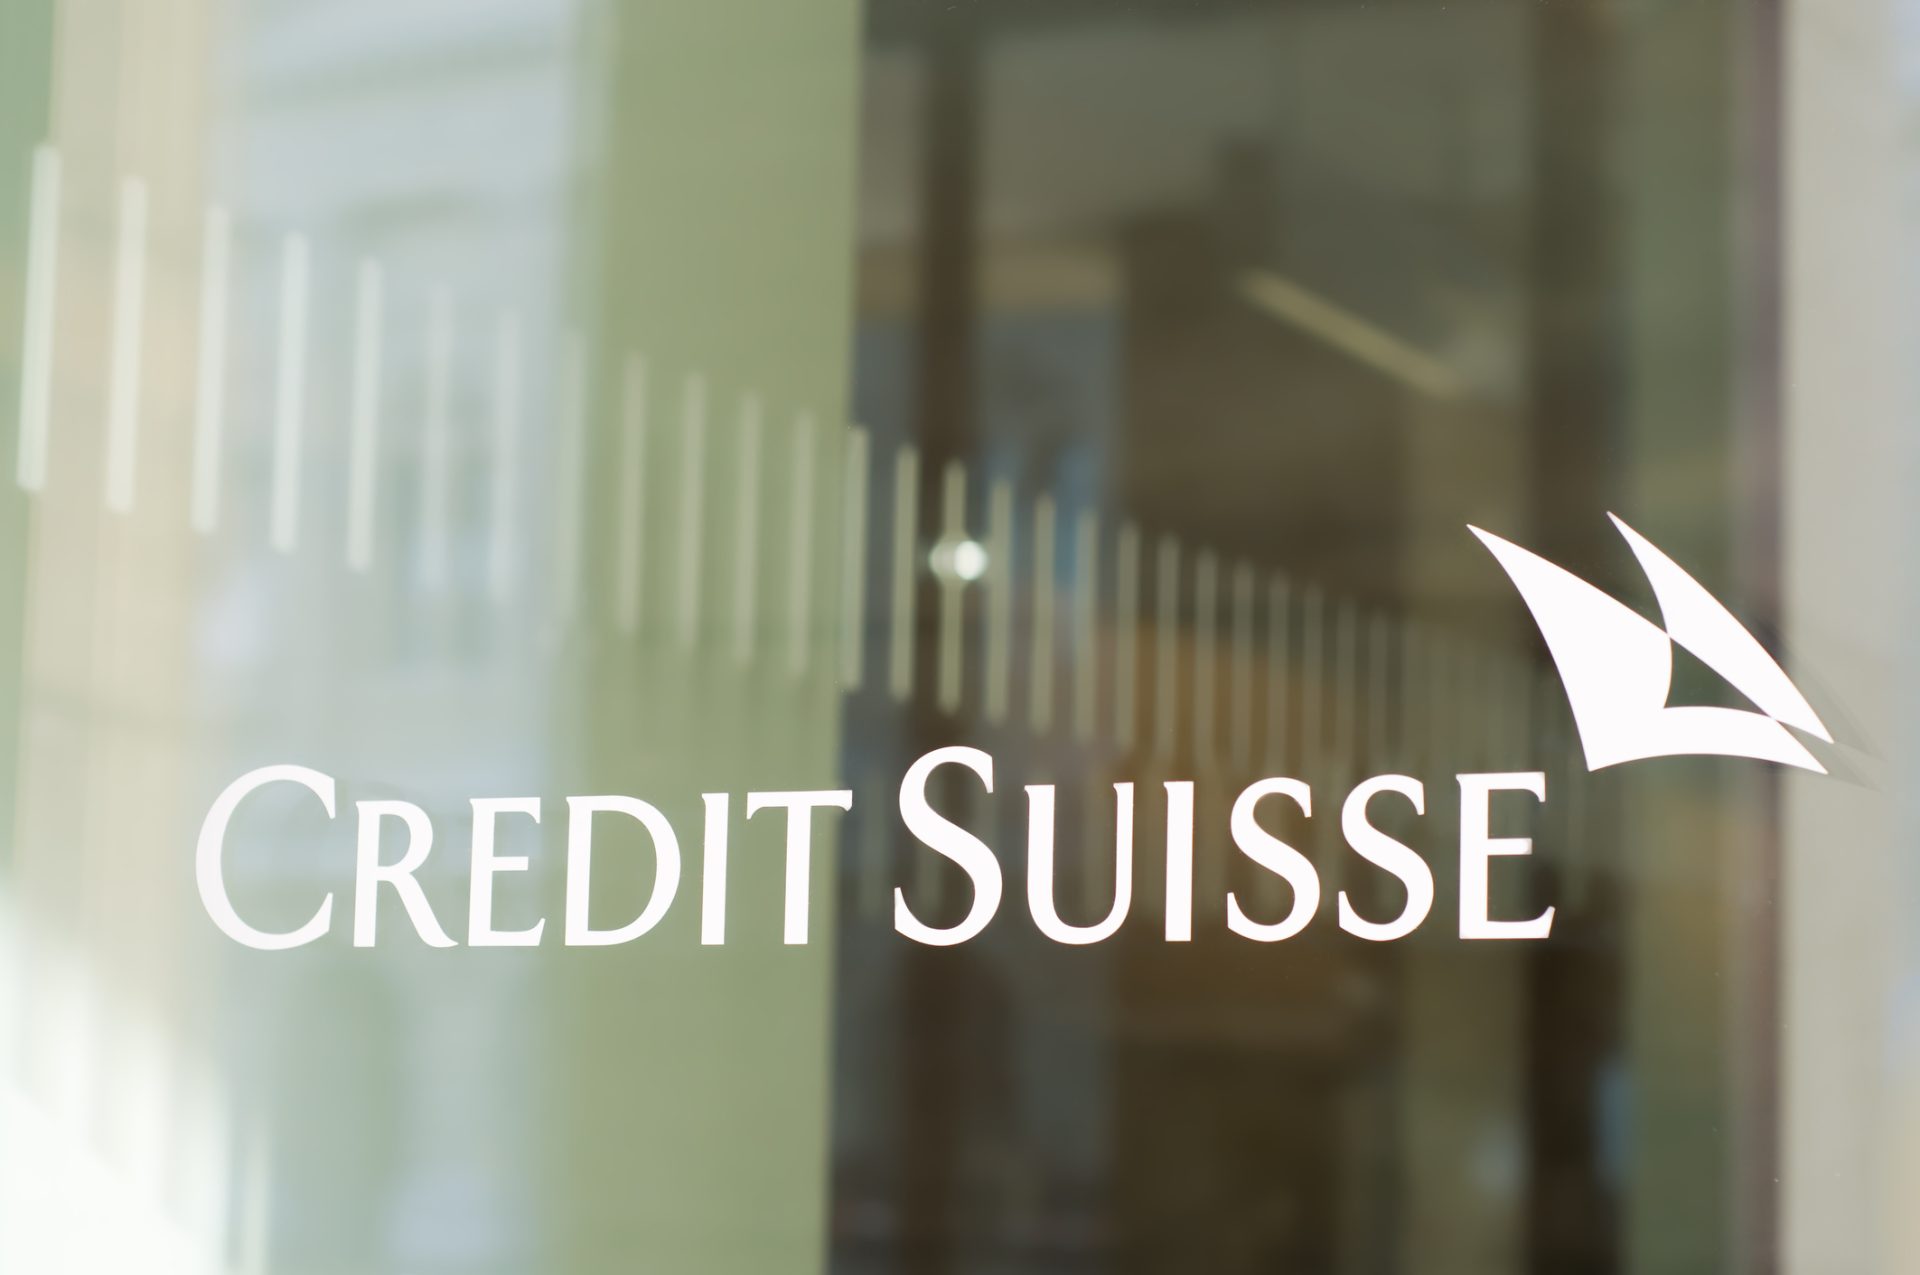 Singapura multa Crédit Suisse em 2,67 milhões de euros